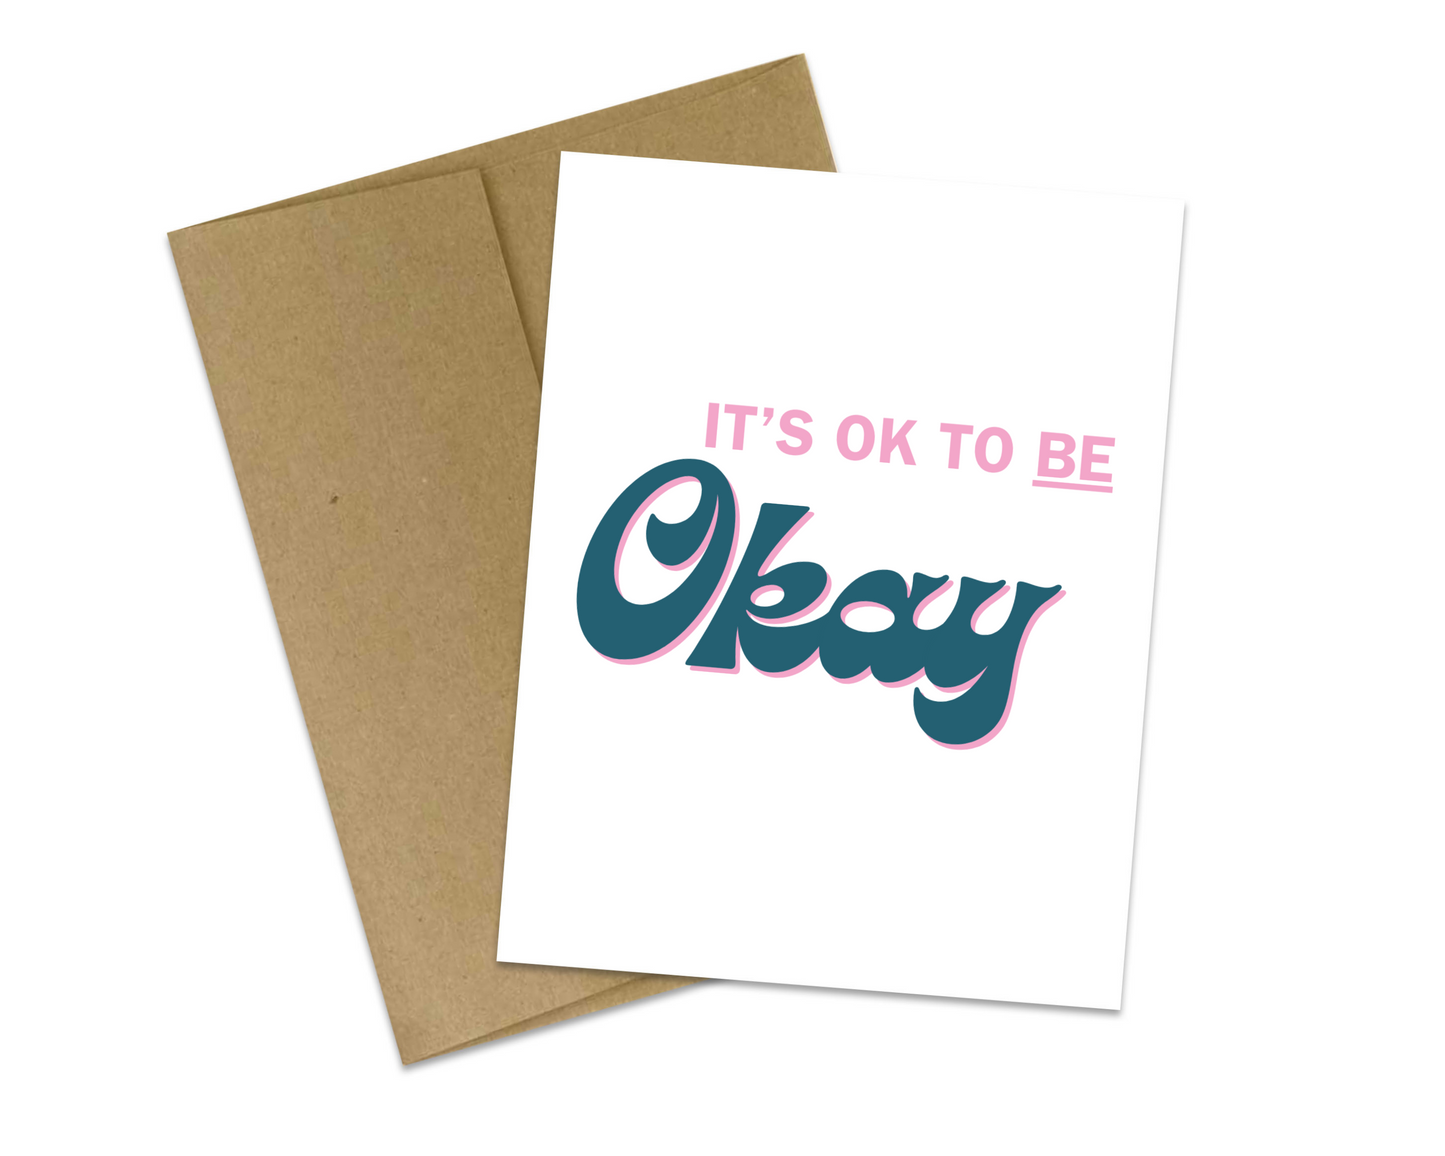 It's OK to BE OKAY